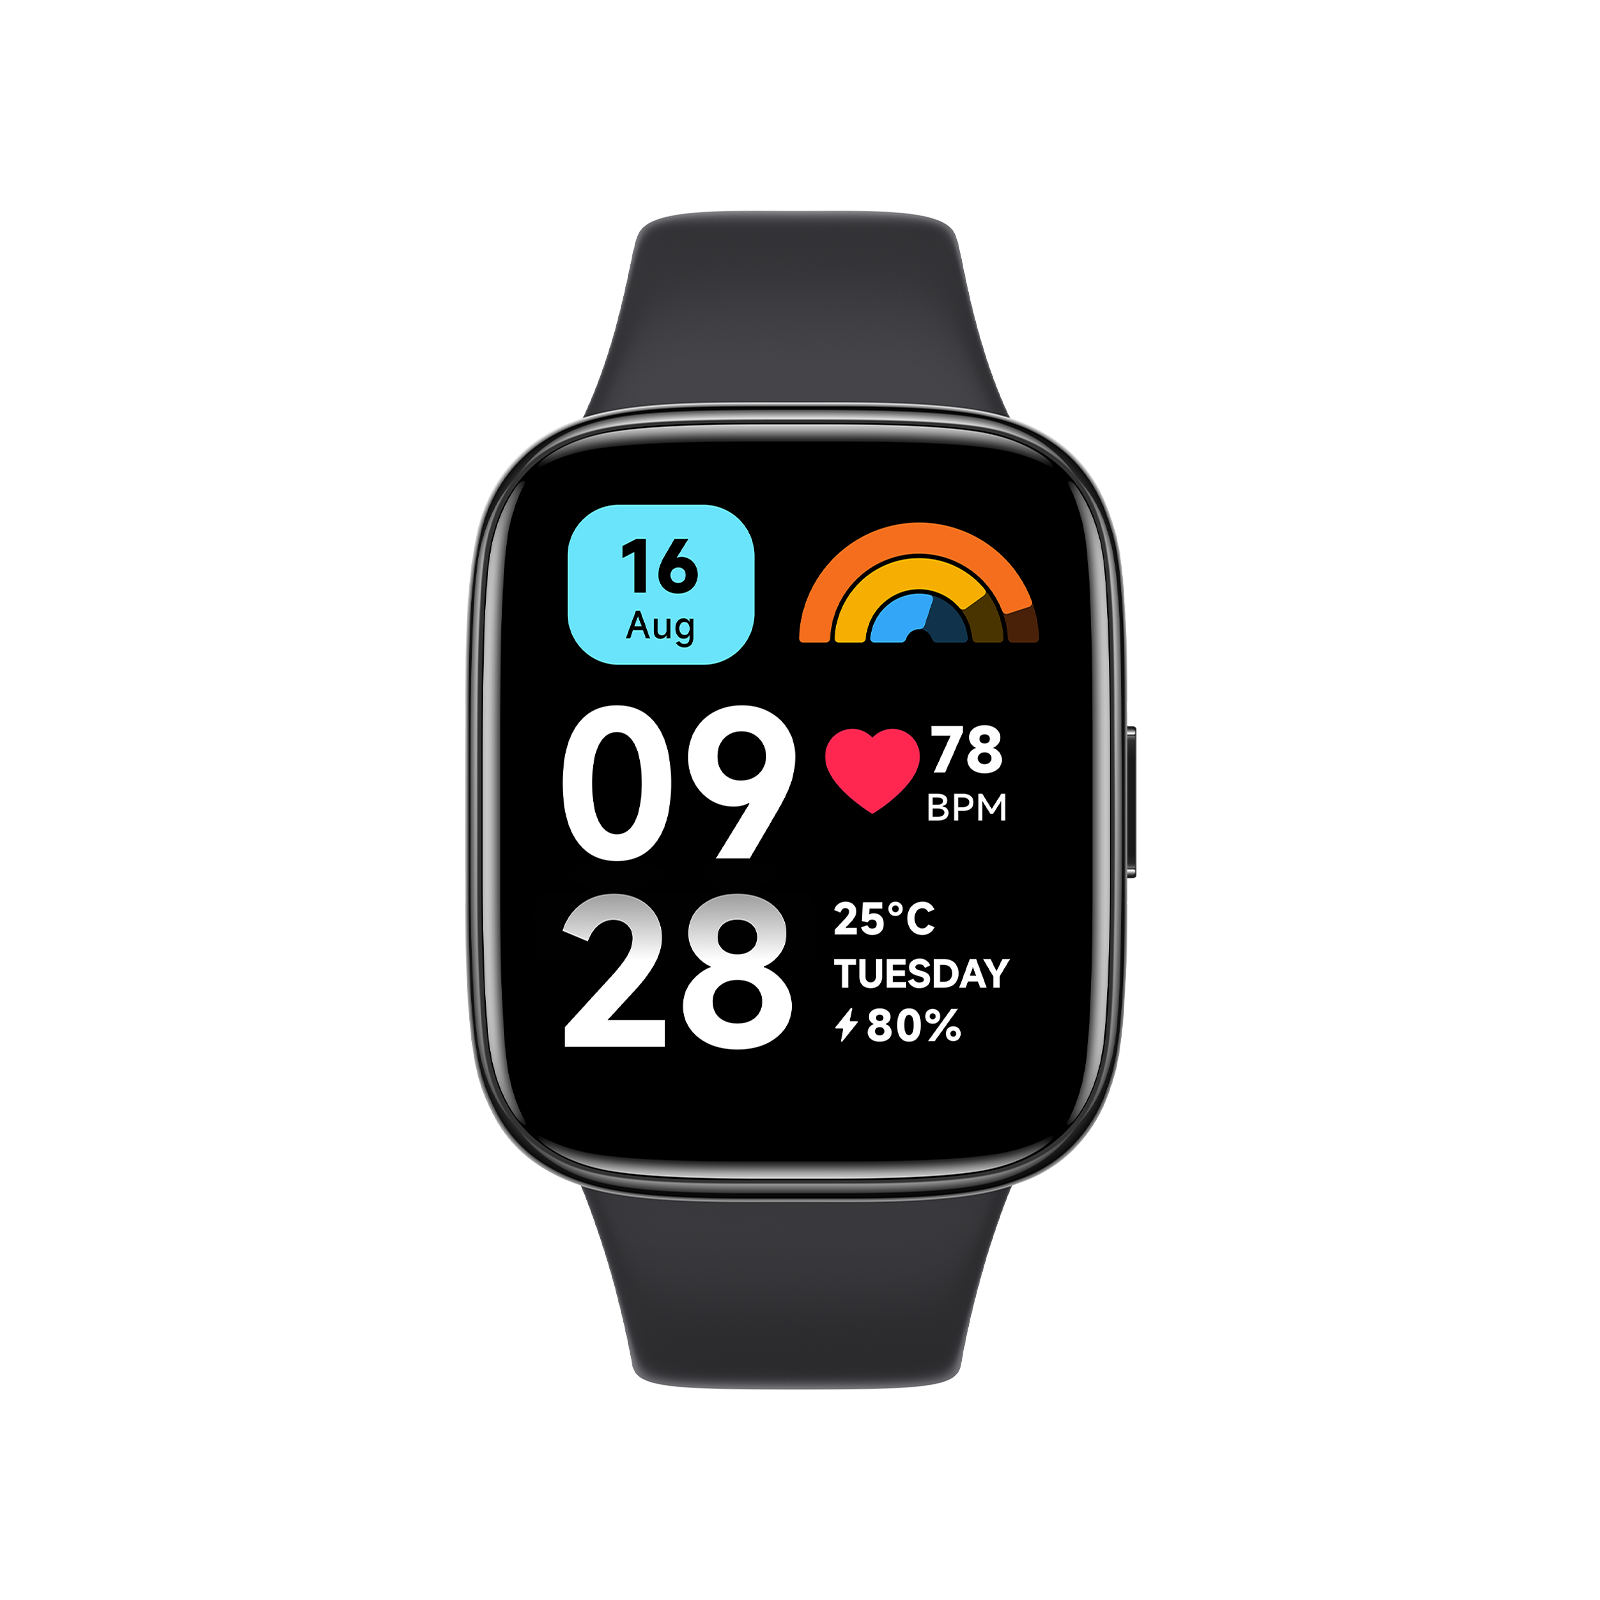 Smartwatch Redmi Watch 3 Active - Xiaomi Medellin